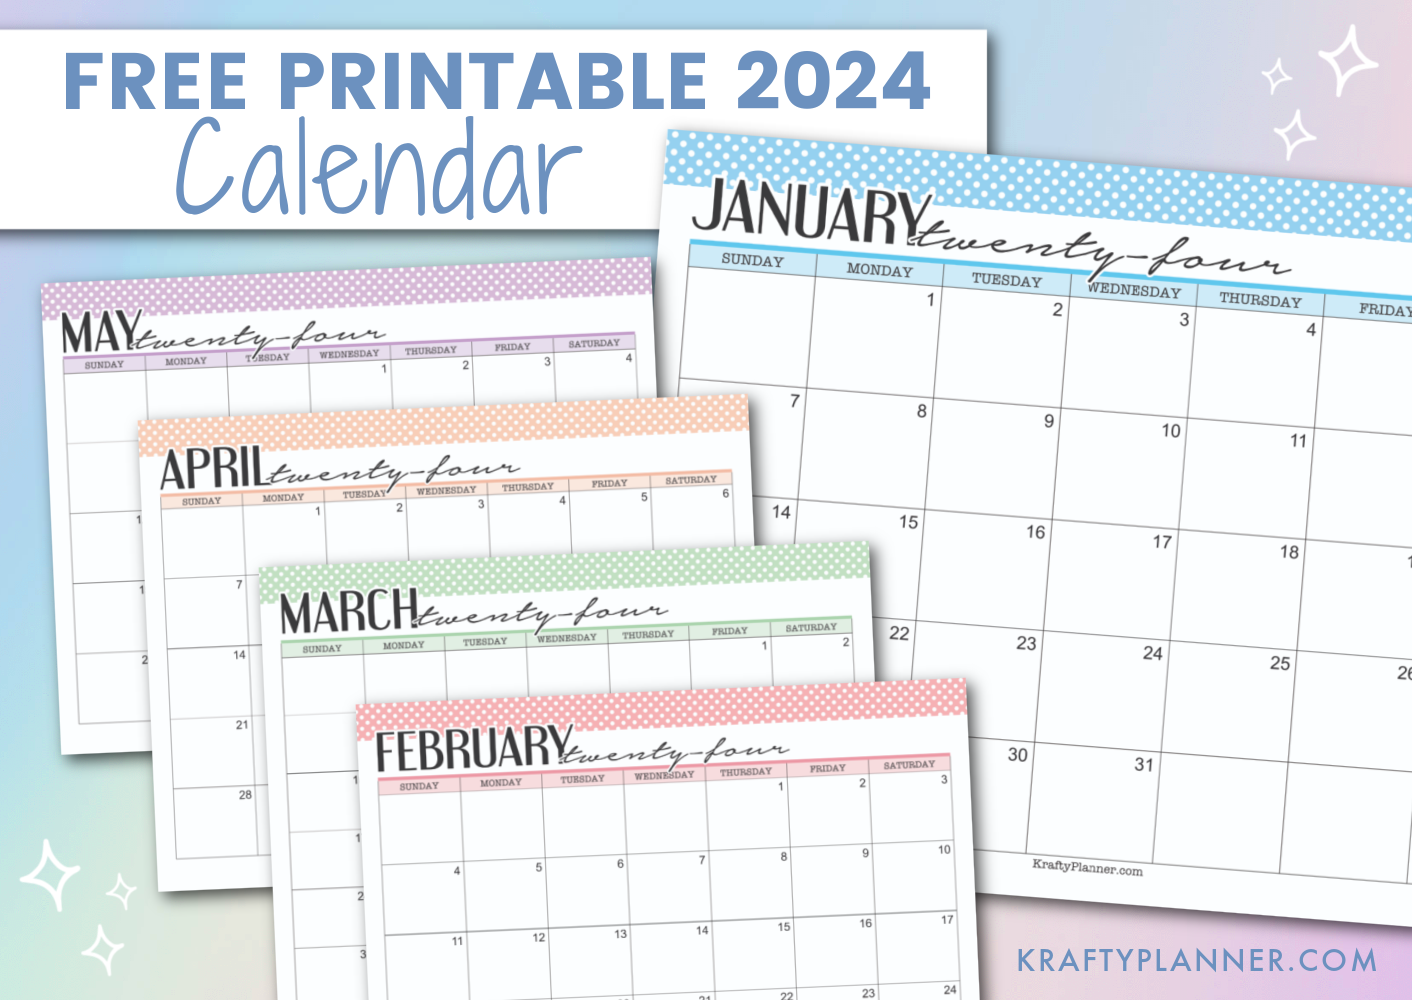 Free Printable 2024 Calendars (Color) — Krafty Planner for 2024 Color Calendar Printable